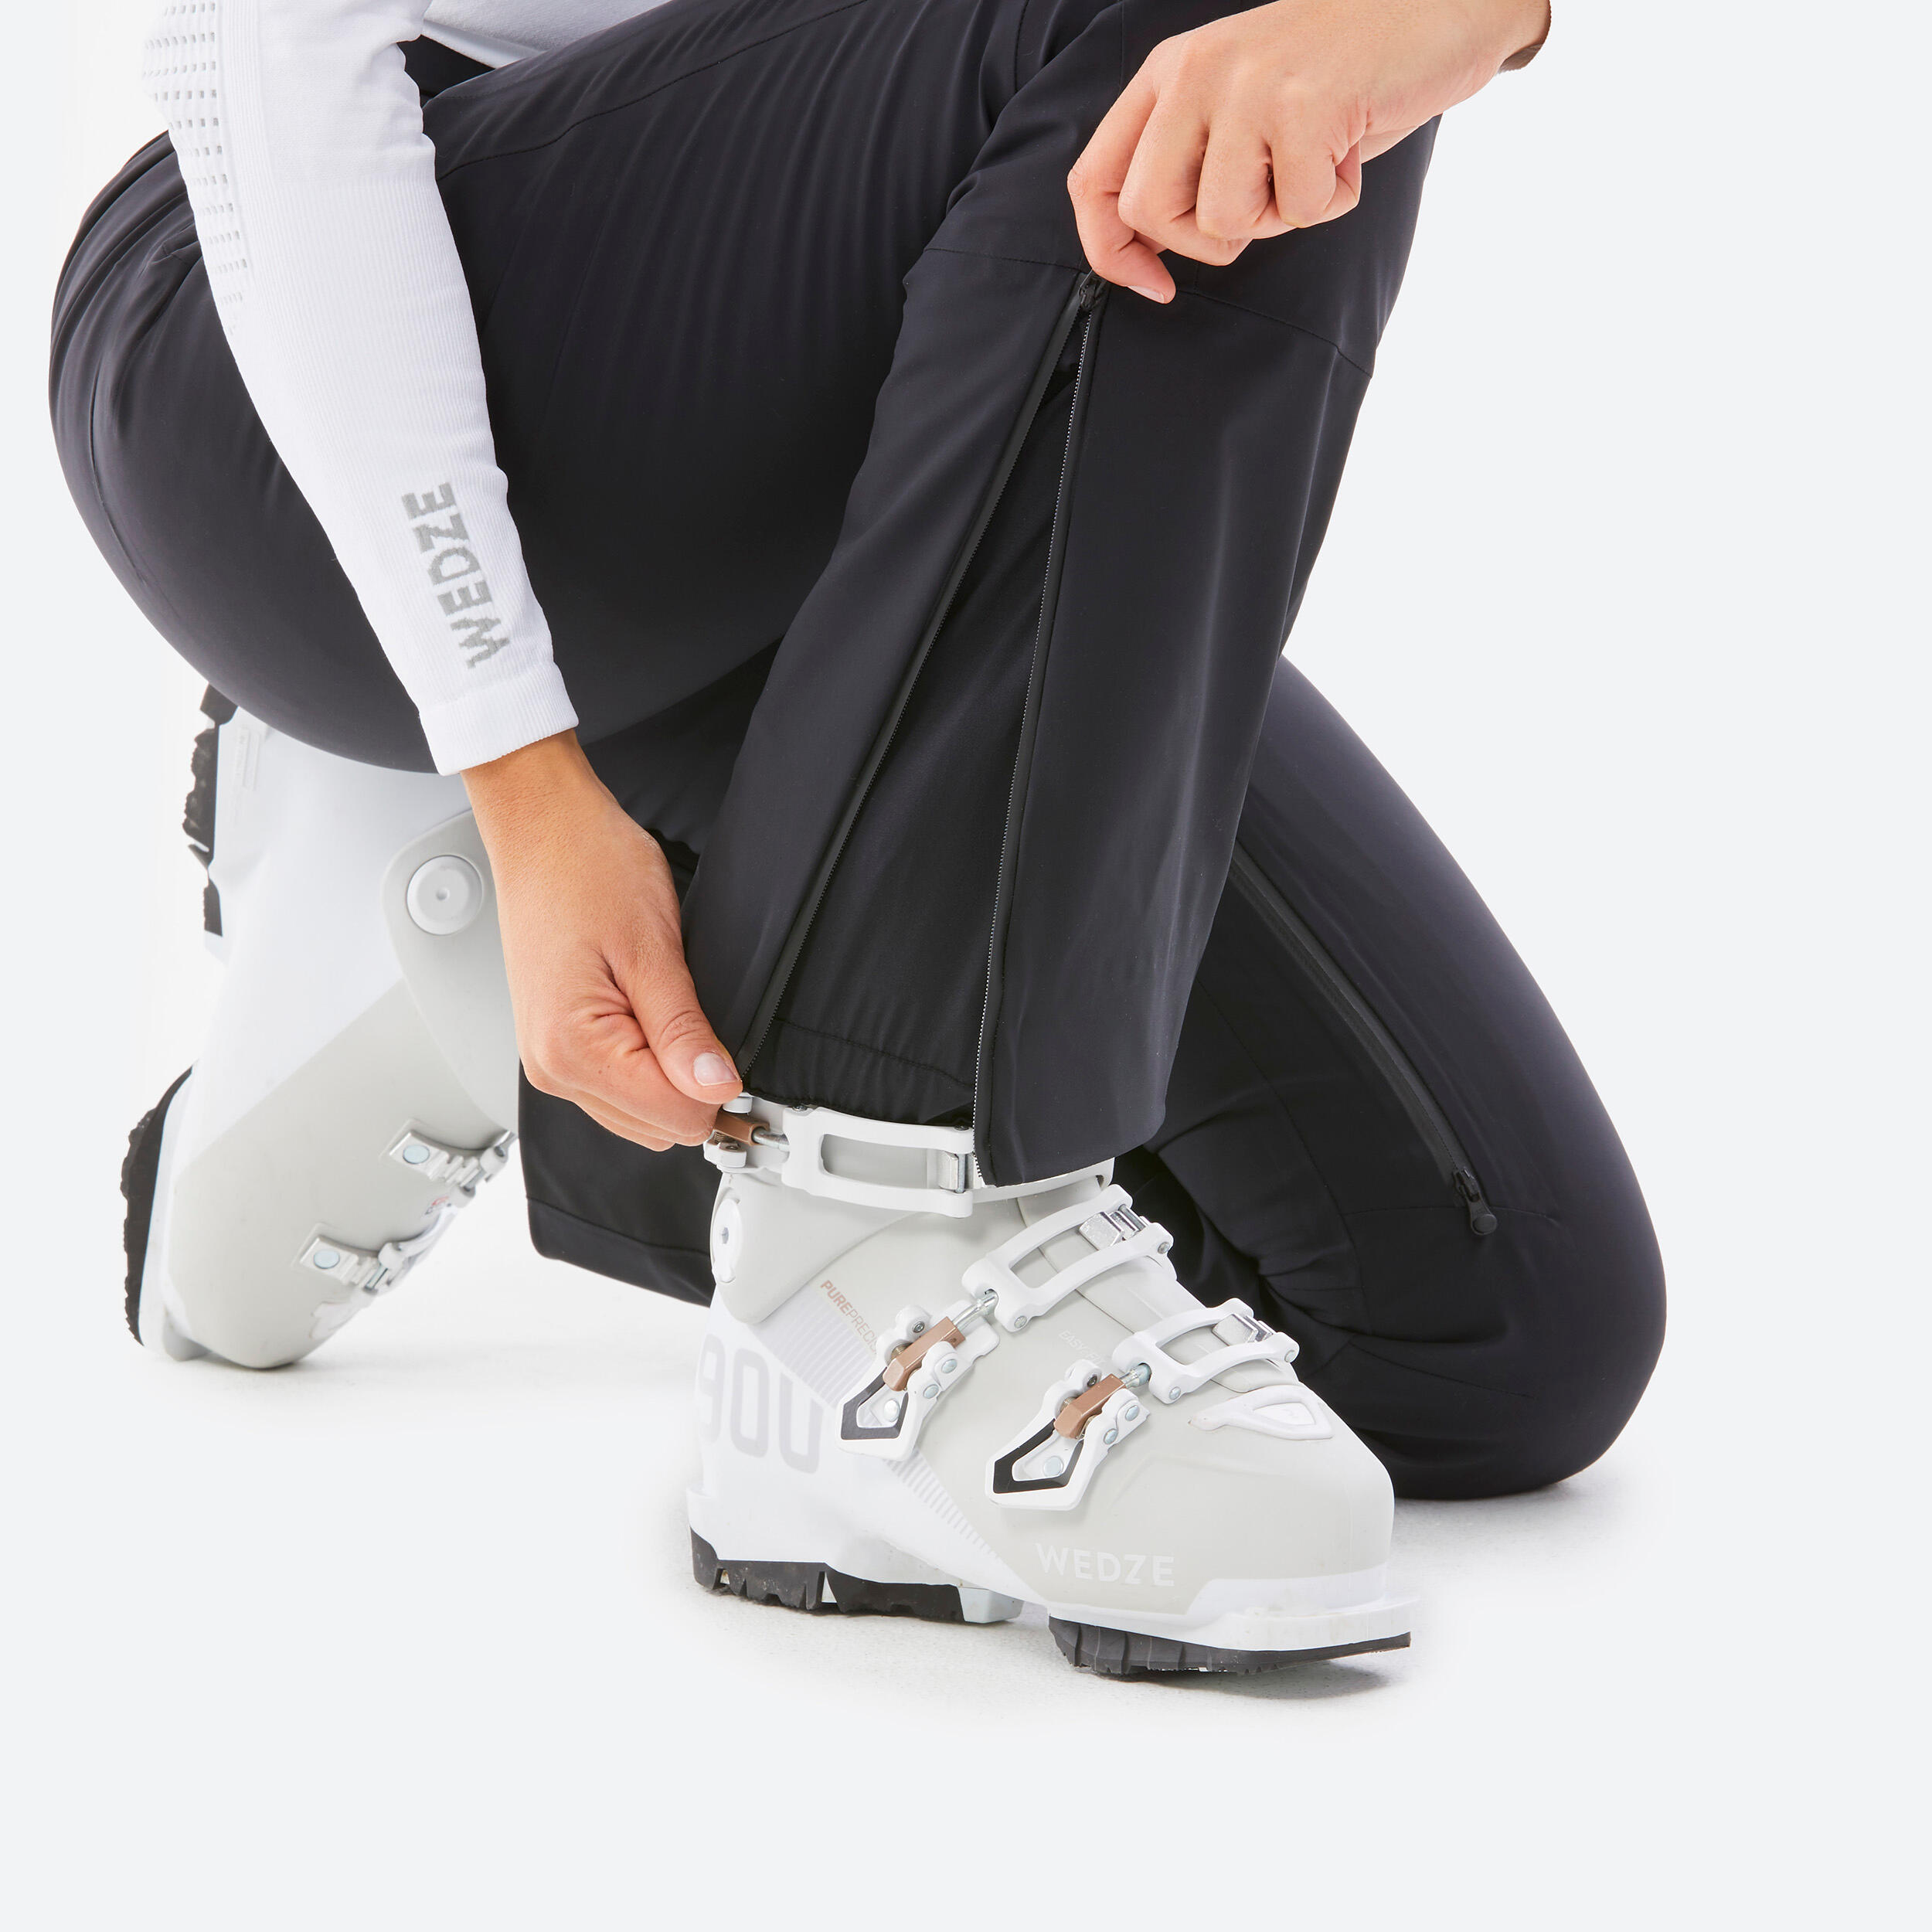 Women’s Ski Trousers 900 - White 11/15